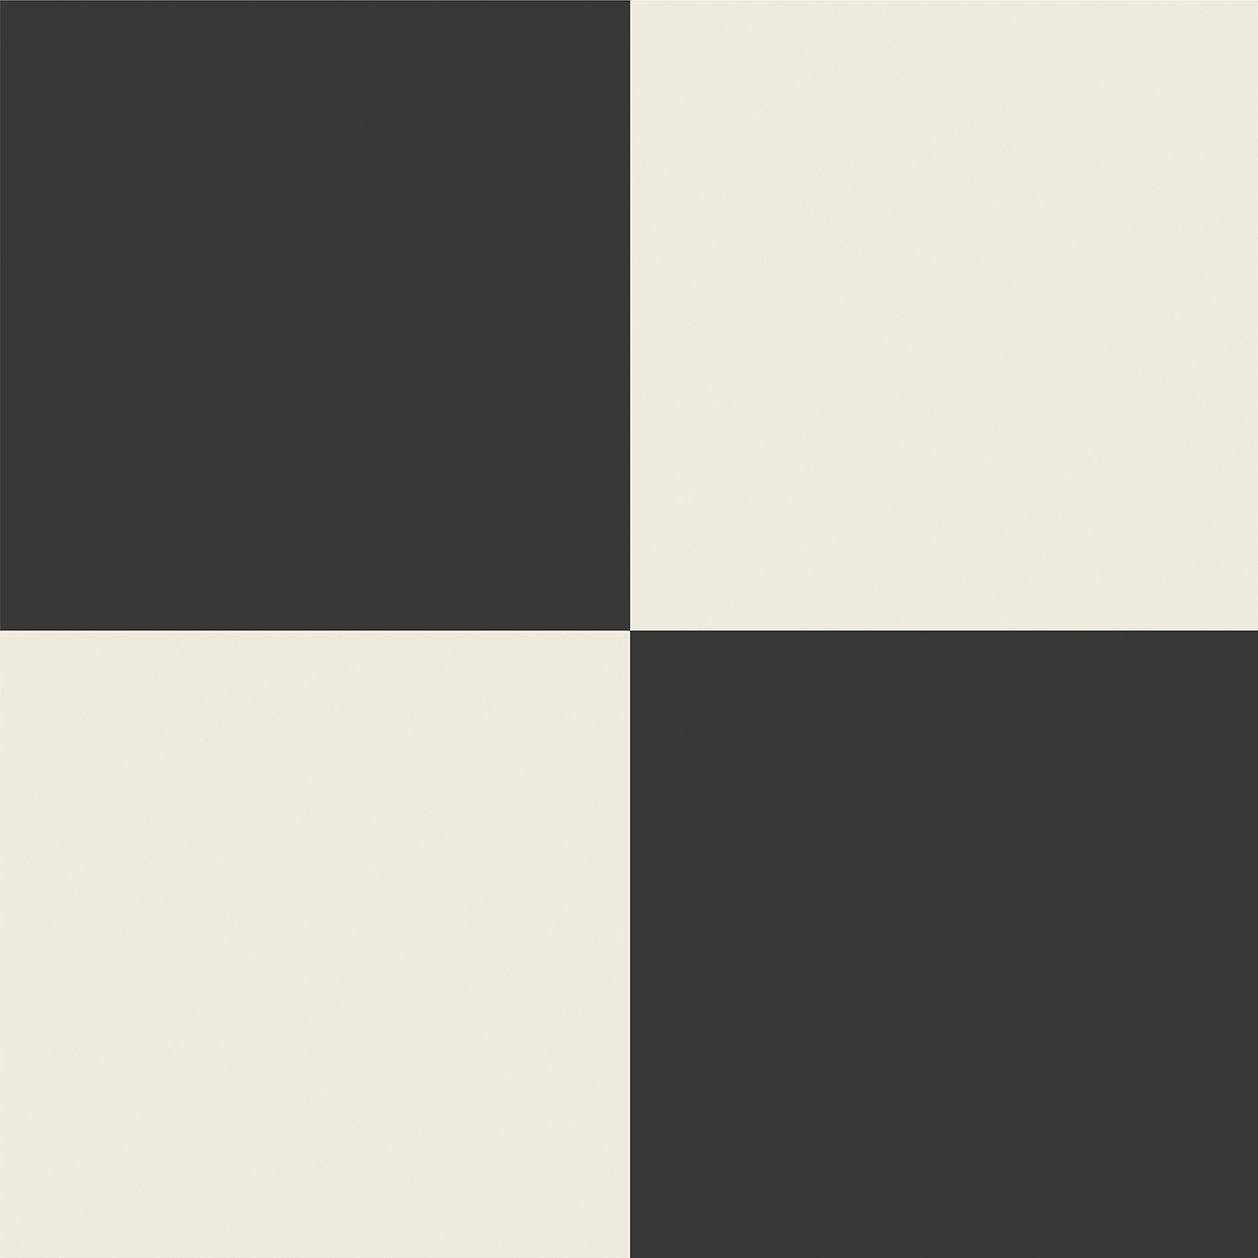 072322-19-01_JumboCheck_ECO_Black+White.jpg